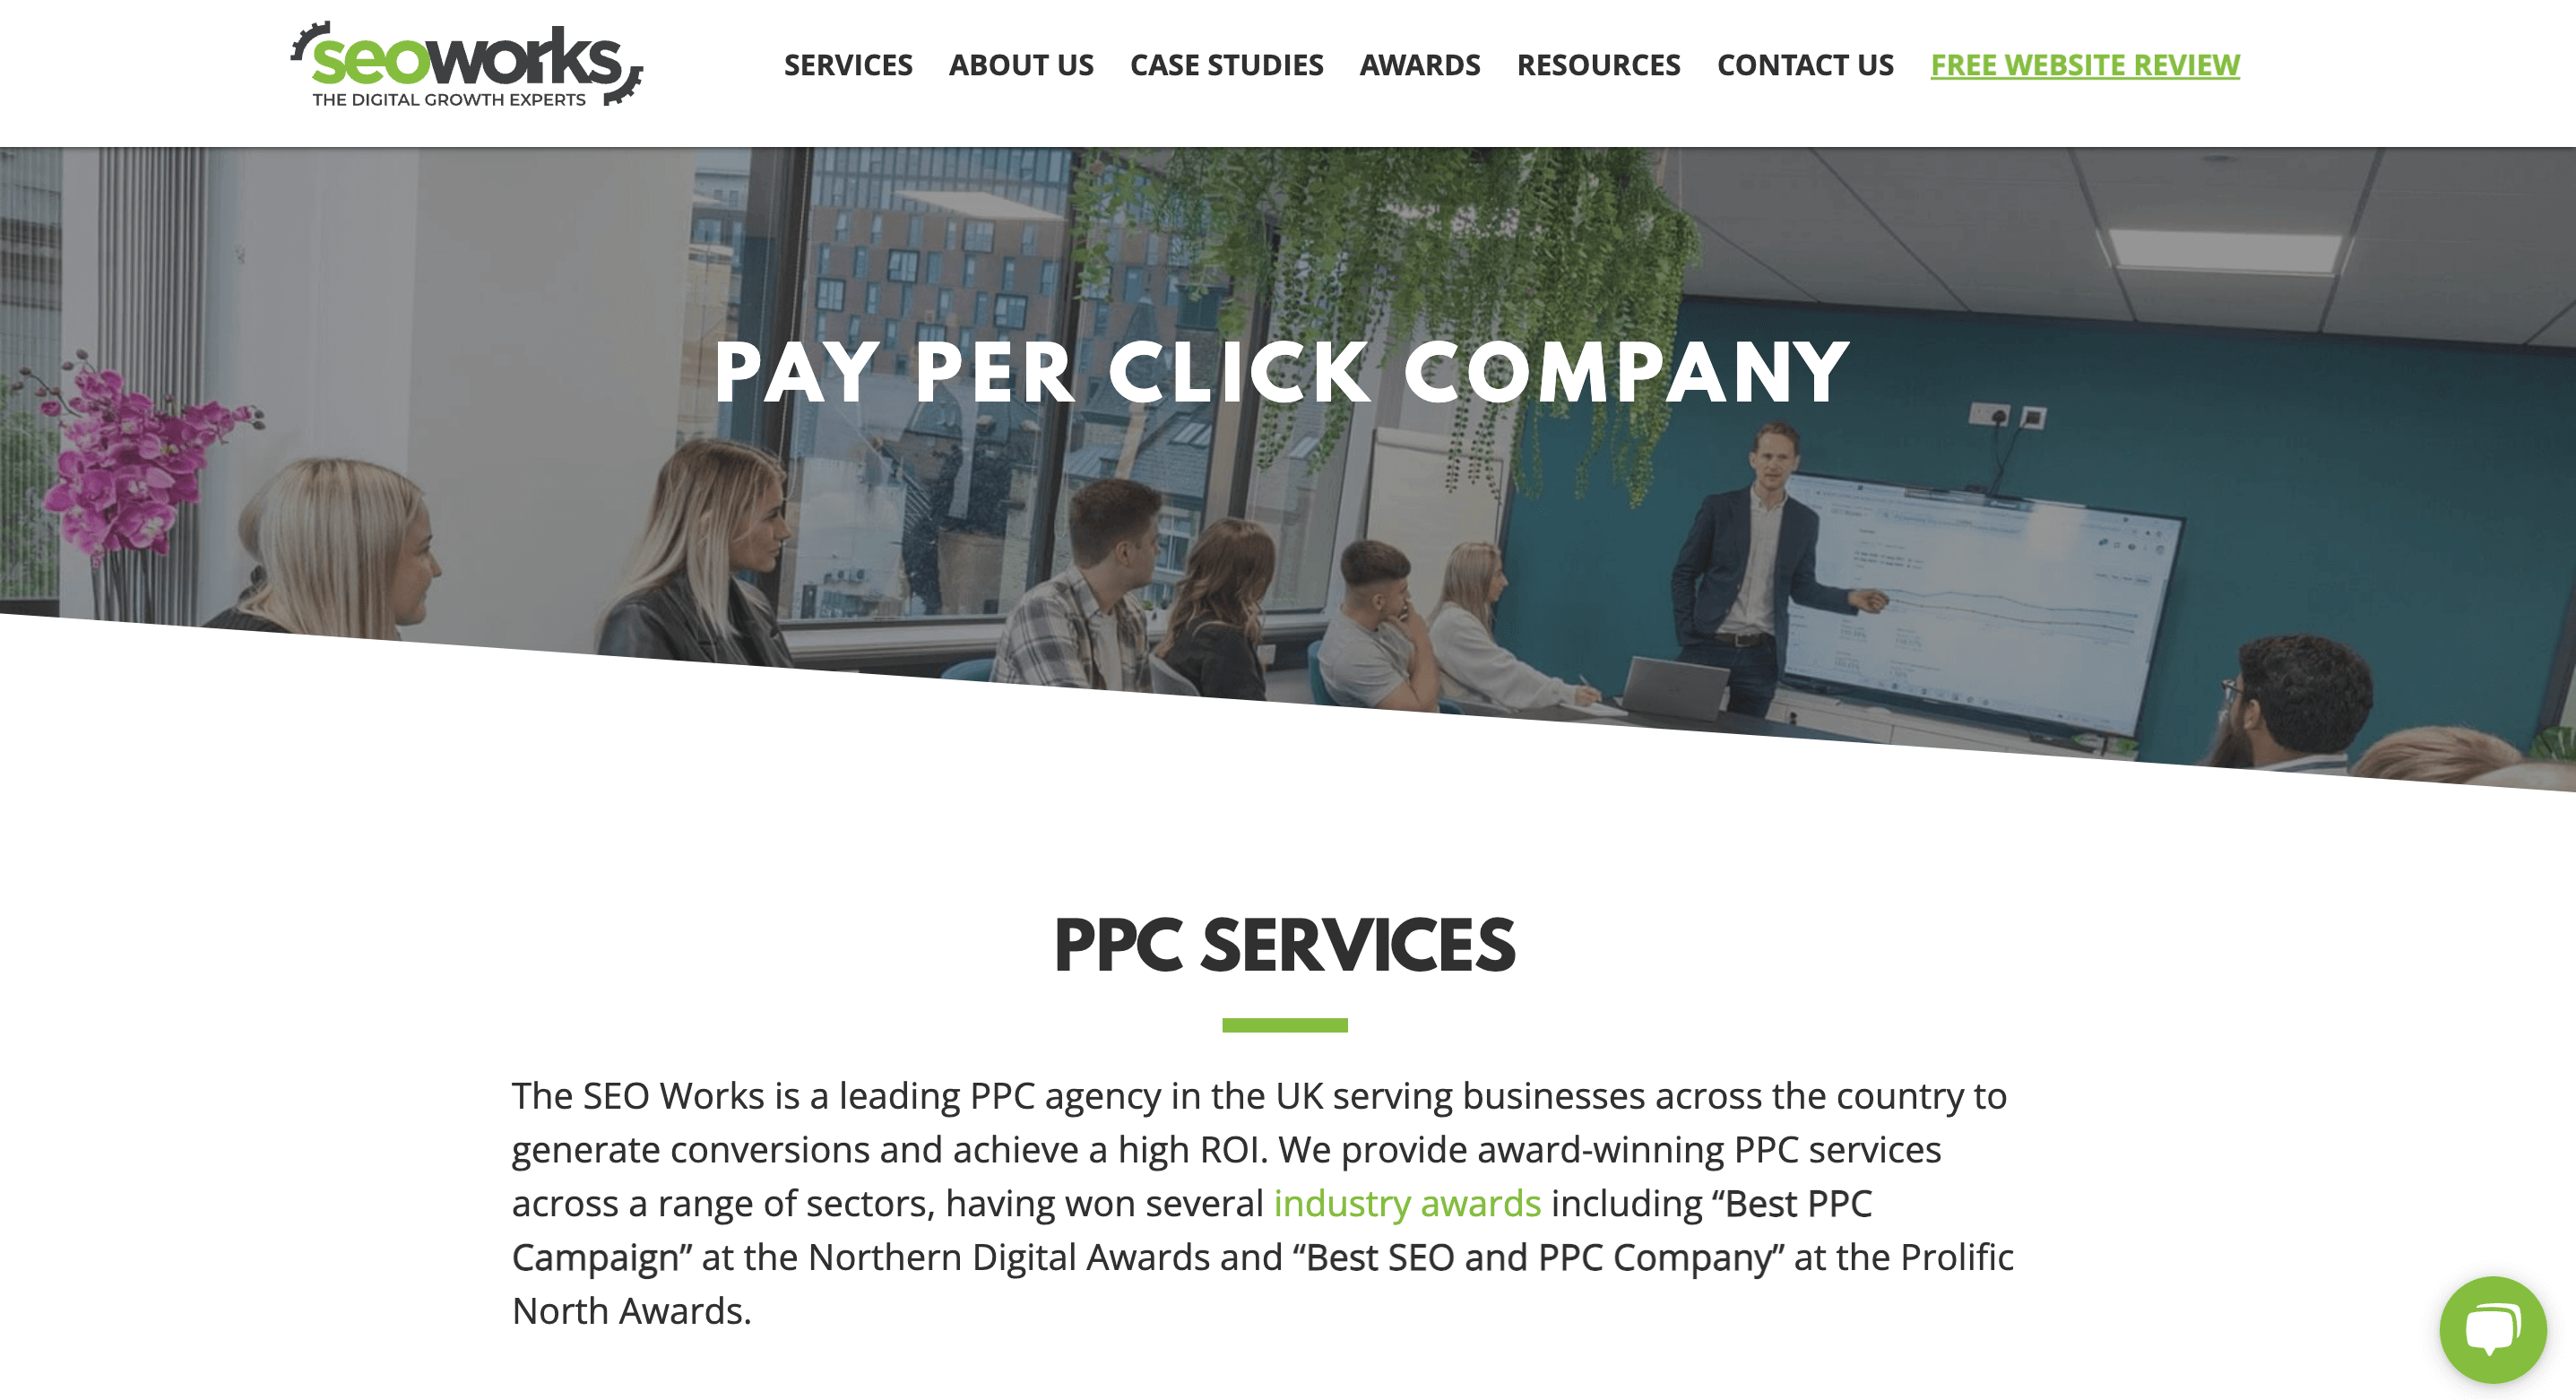 best eCommerce PPC agency